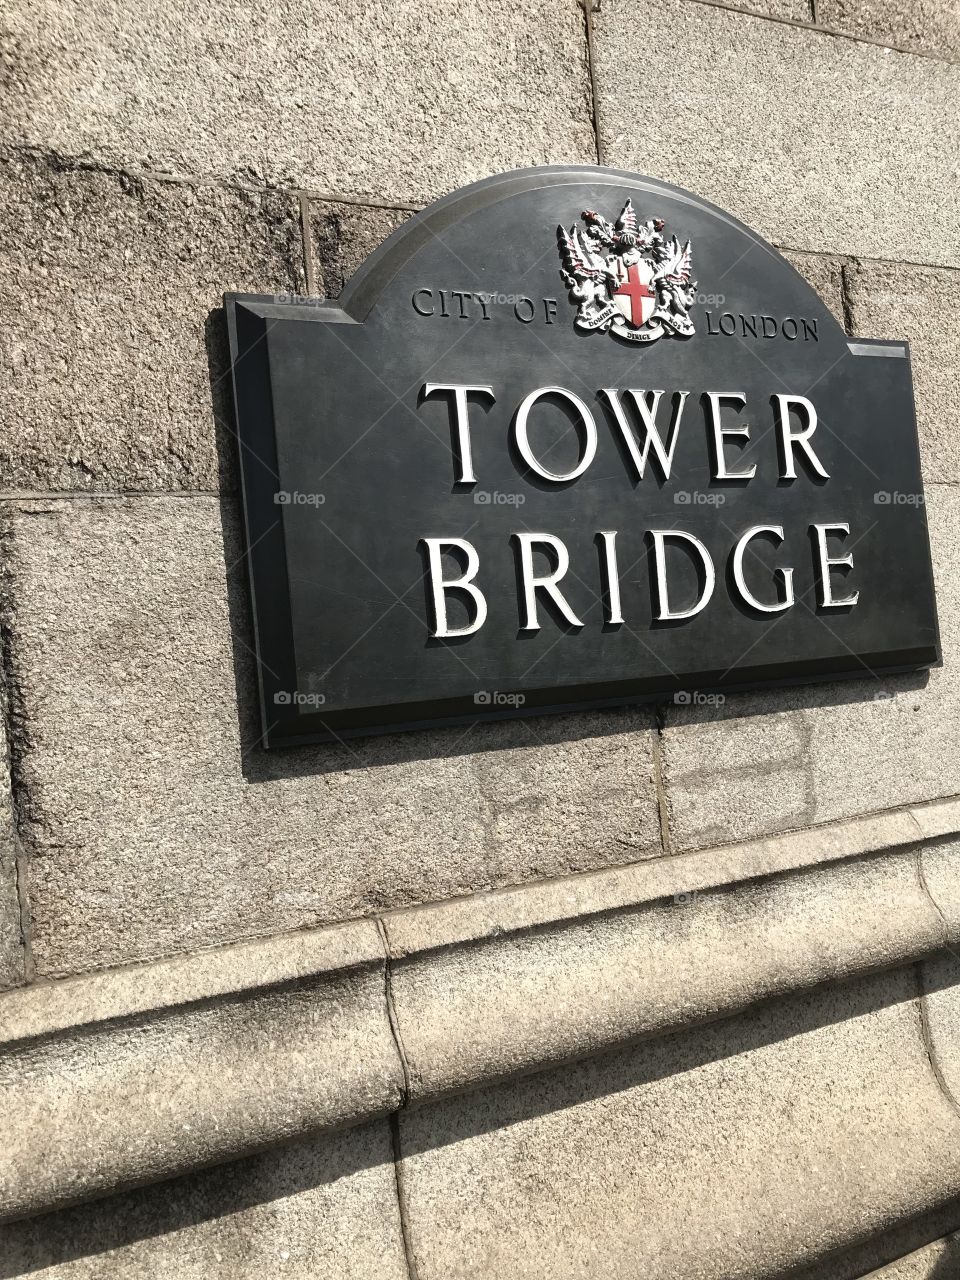 Tower bridge 